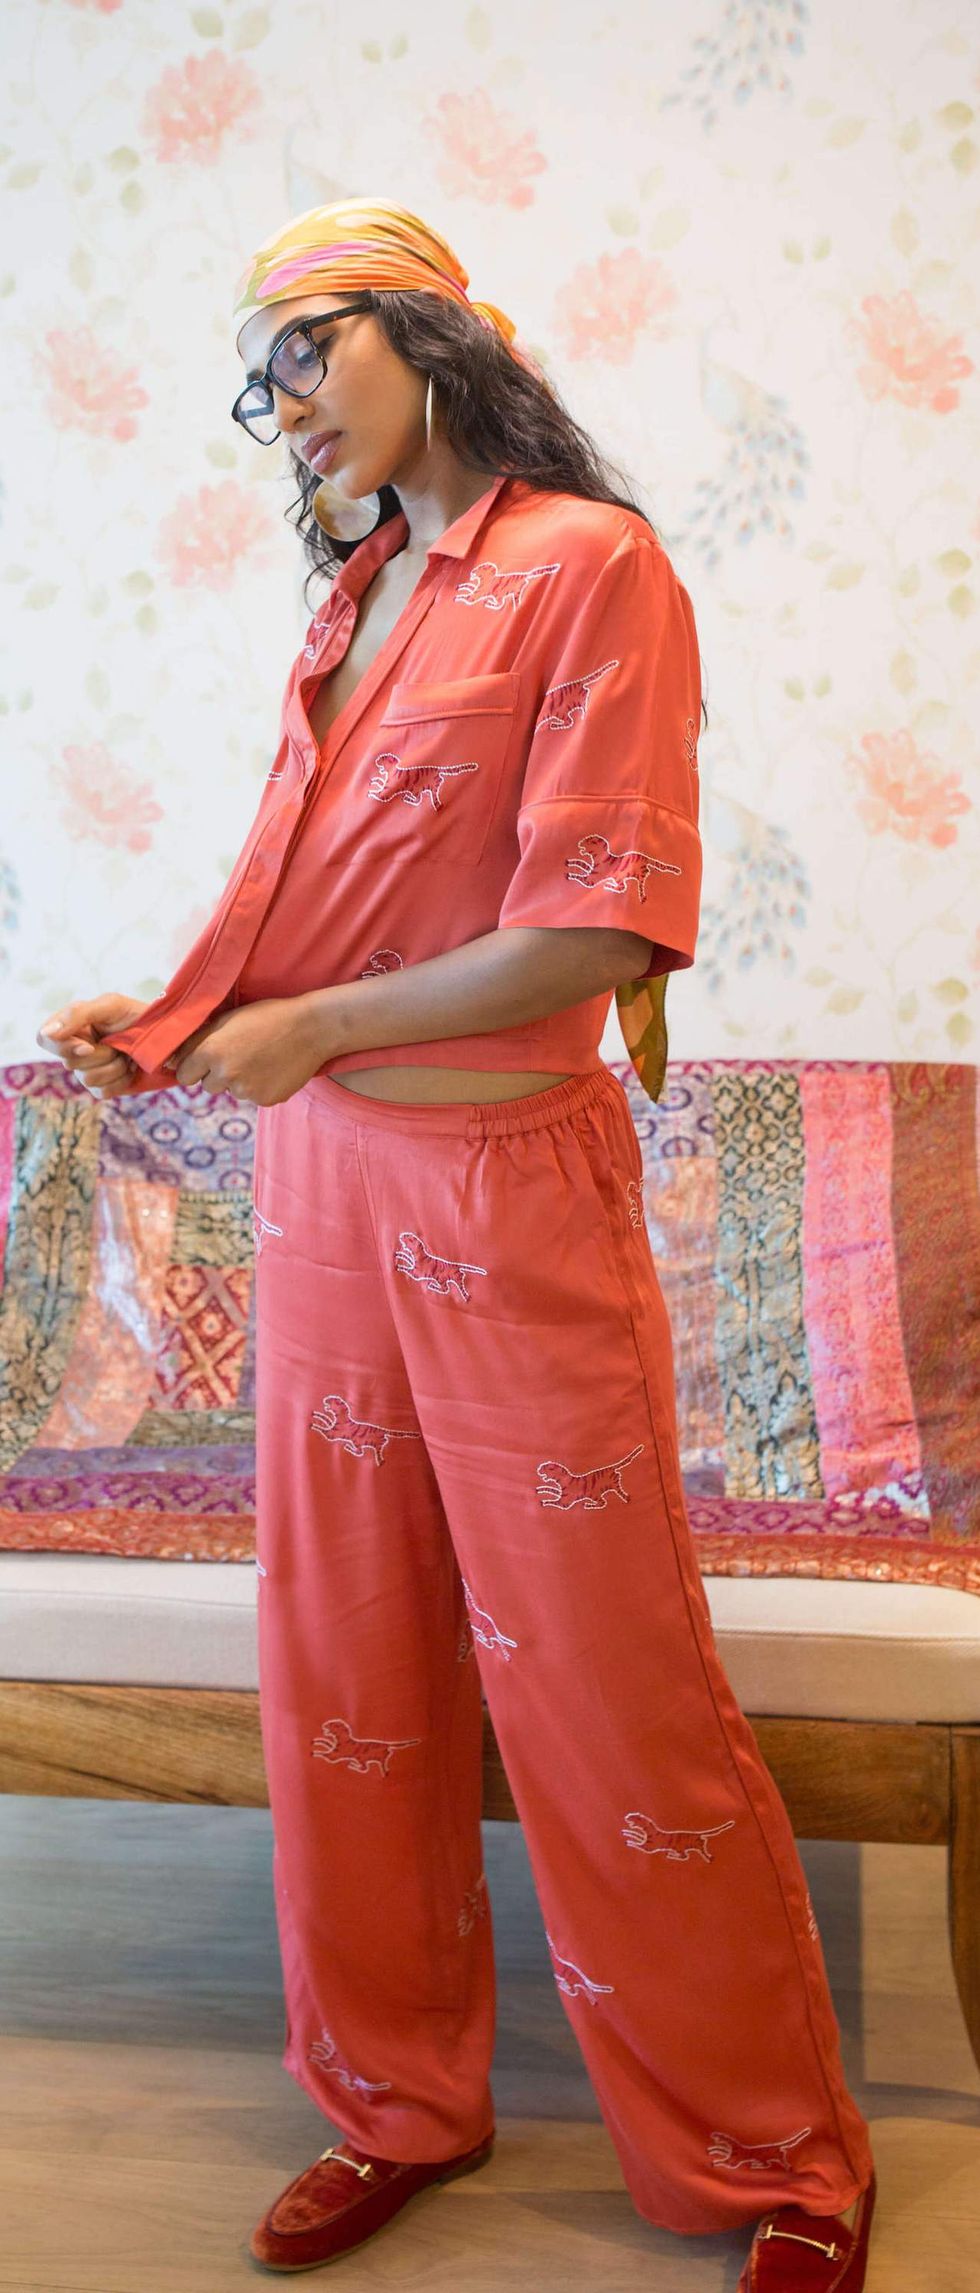 Avidlove Women Sexy Sleepwear Lace Pajamas Set Short India